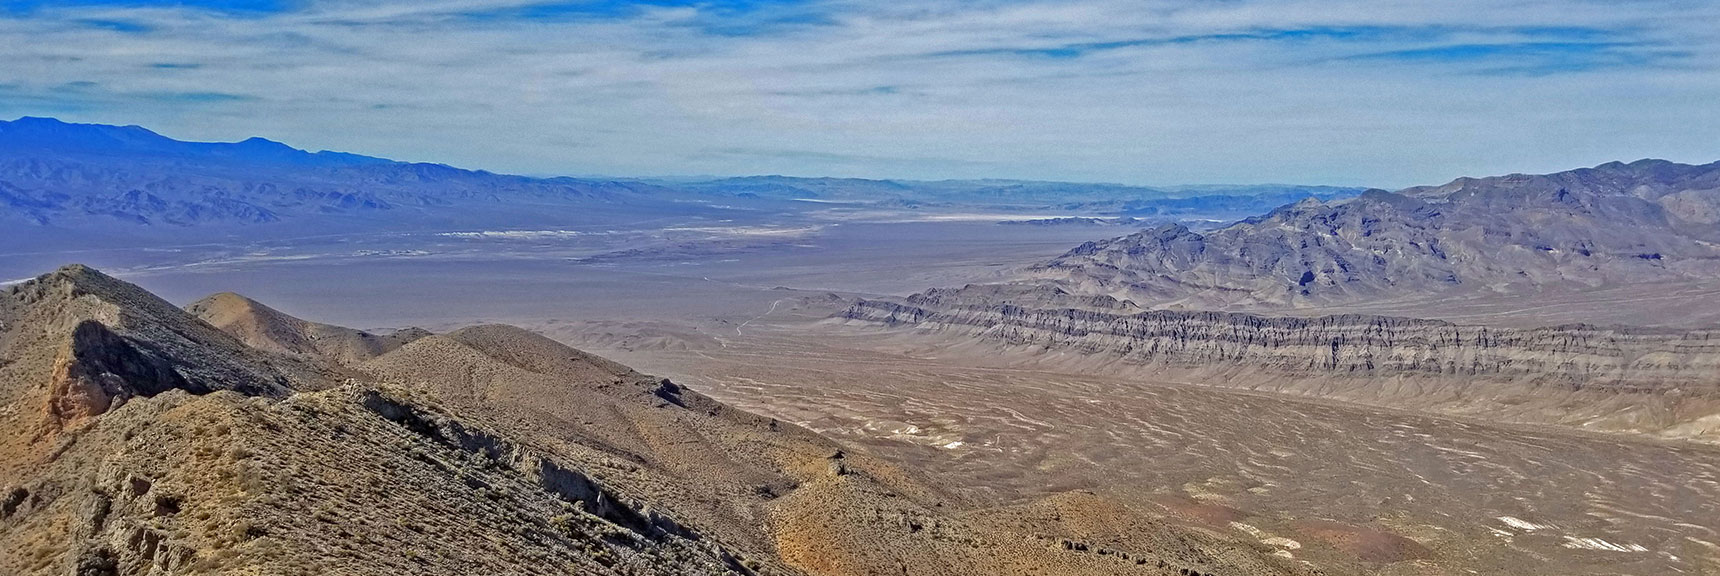 View Northwest Up the Las Vegas Valley, Hwy 95 Corridor. | Gass Peak Grand Crossing | Desert National Wildlife Refuge to Centennial Hills Las Vegas via Gass Peak Summit by Foot